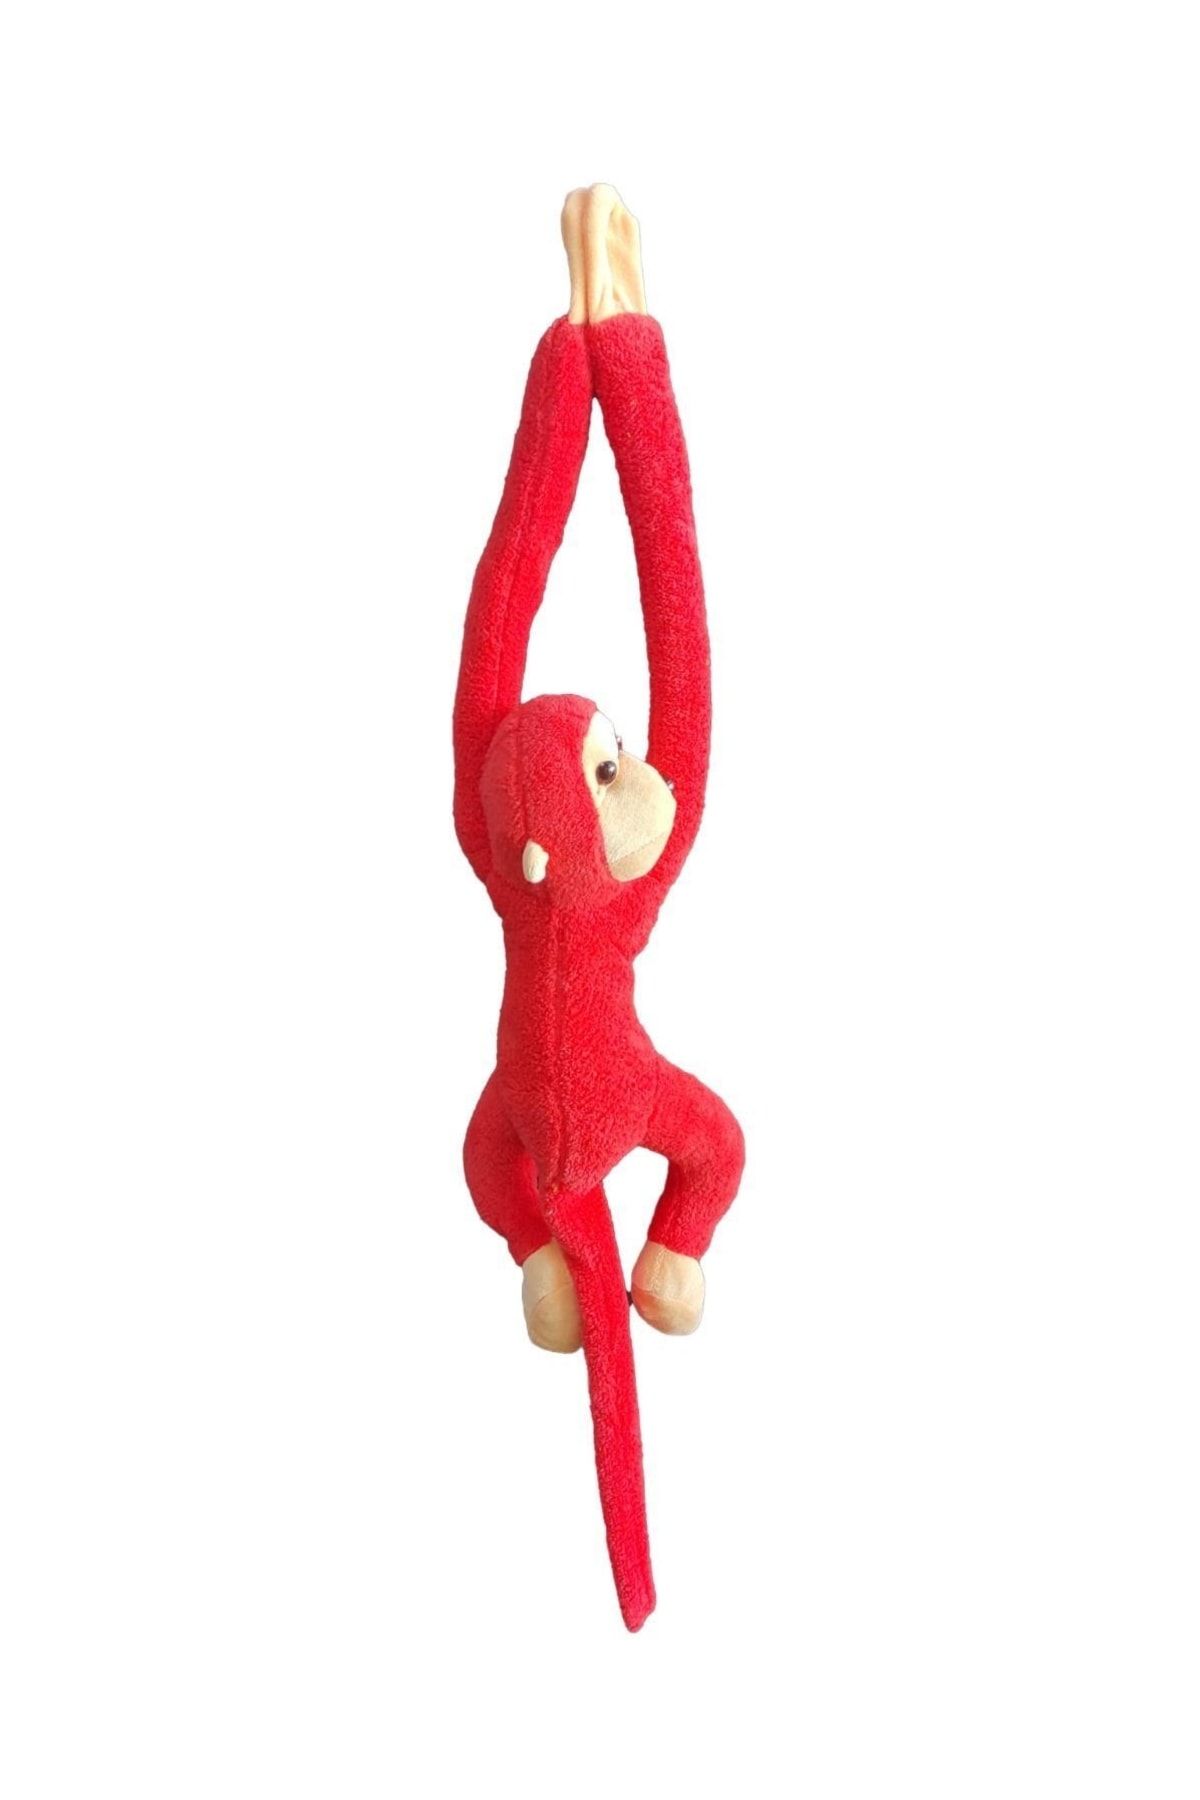 Sole اسباب بازی میمون مخمل دار زیبا، 70 سانتی متری با دست های چسبناک